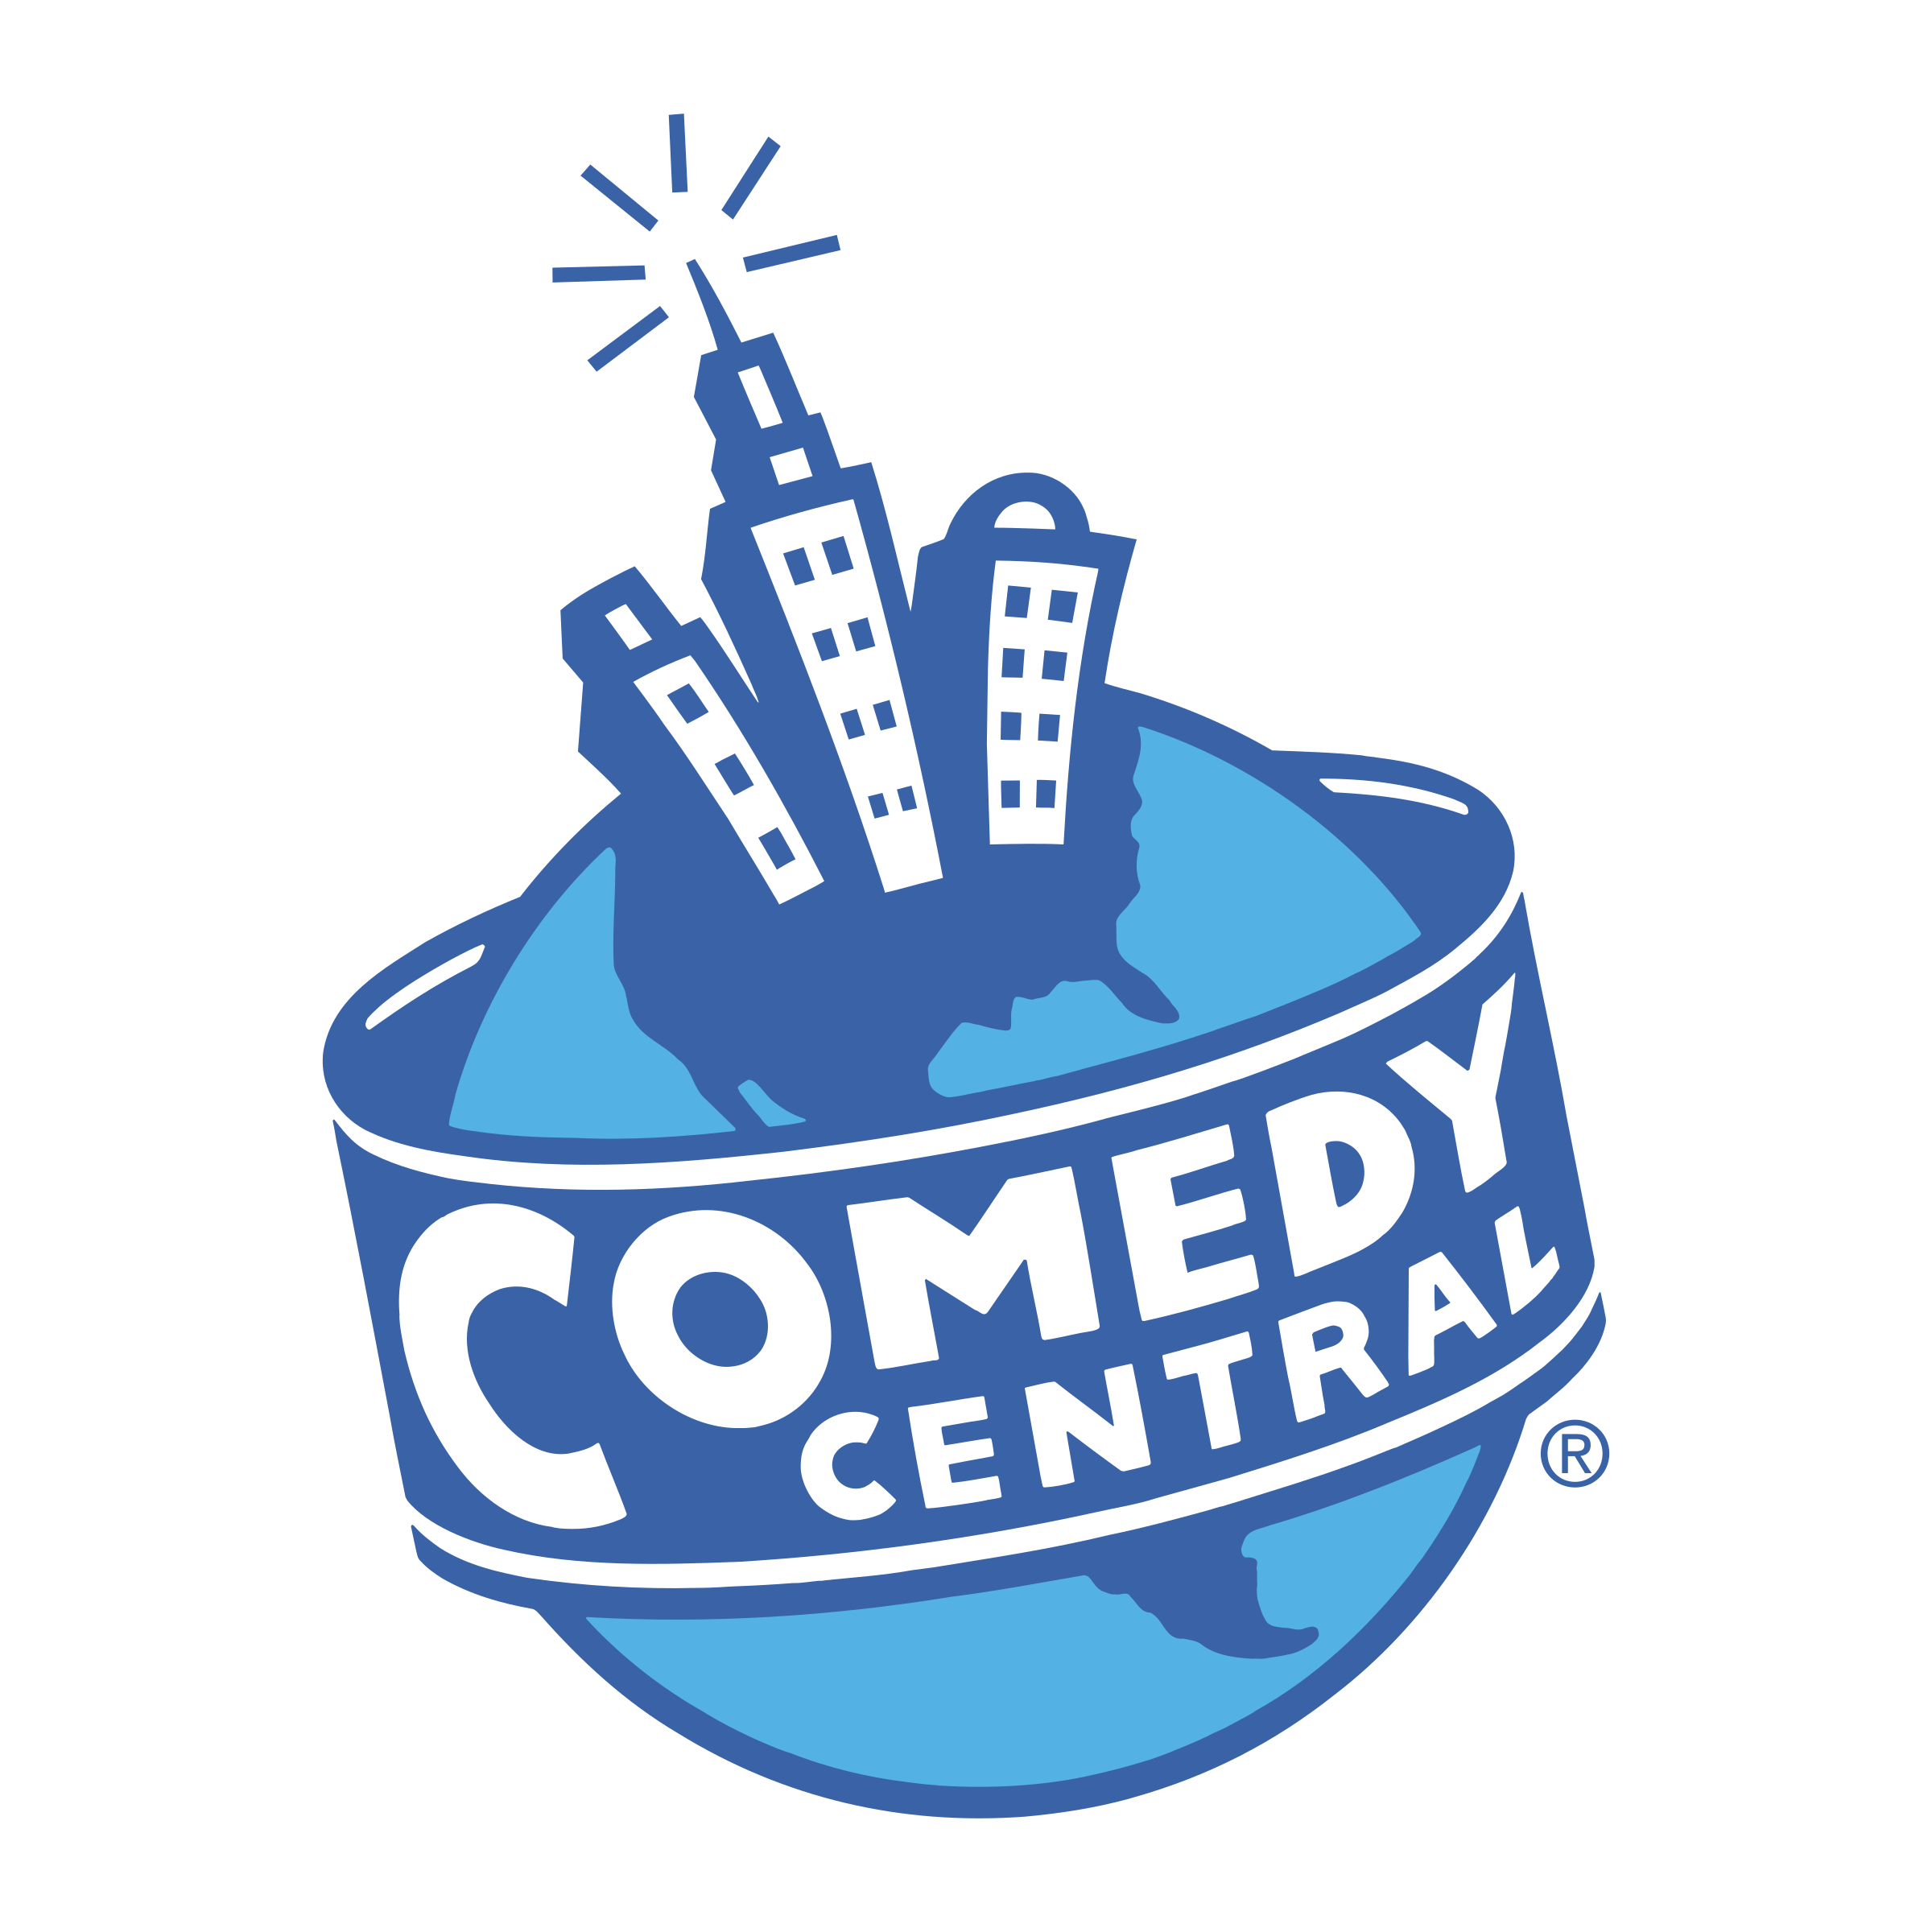 Comedy Central Logo - Comedy Central Logo PNG Transparent & SVG Vector - Freebie Supply